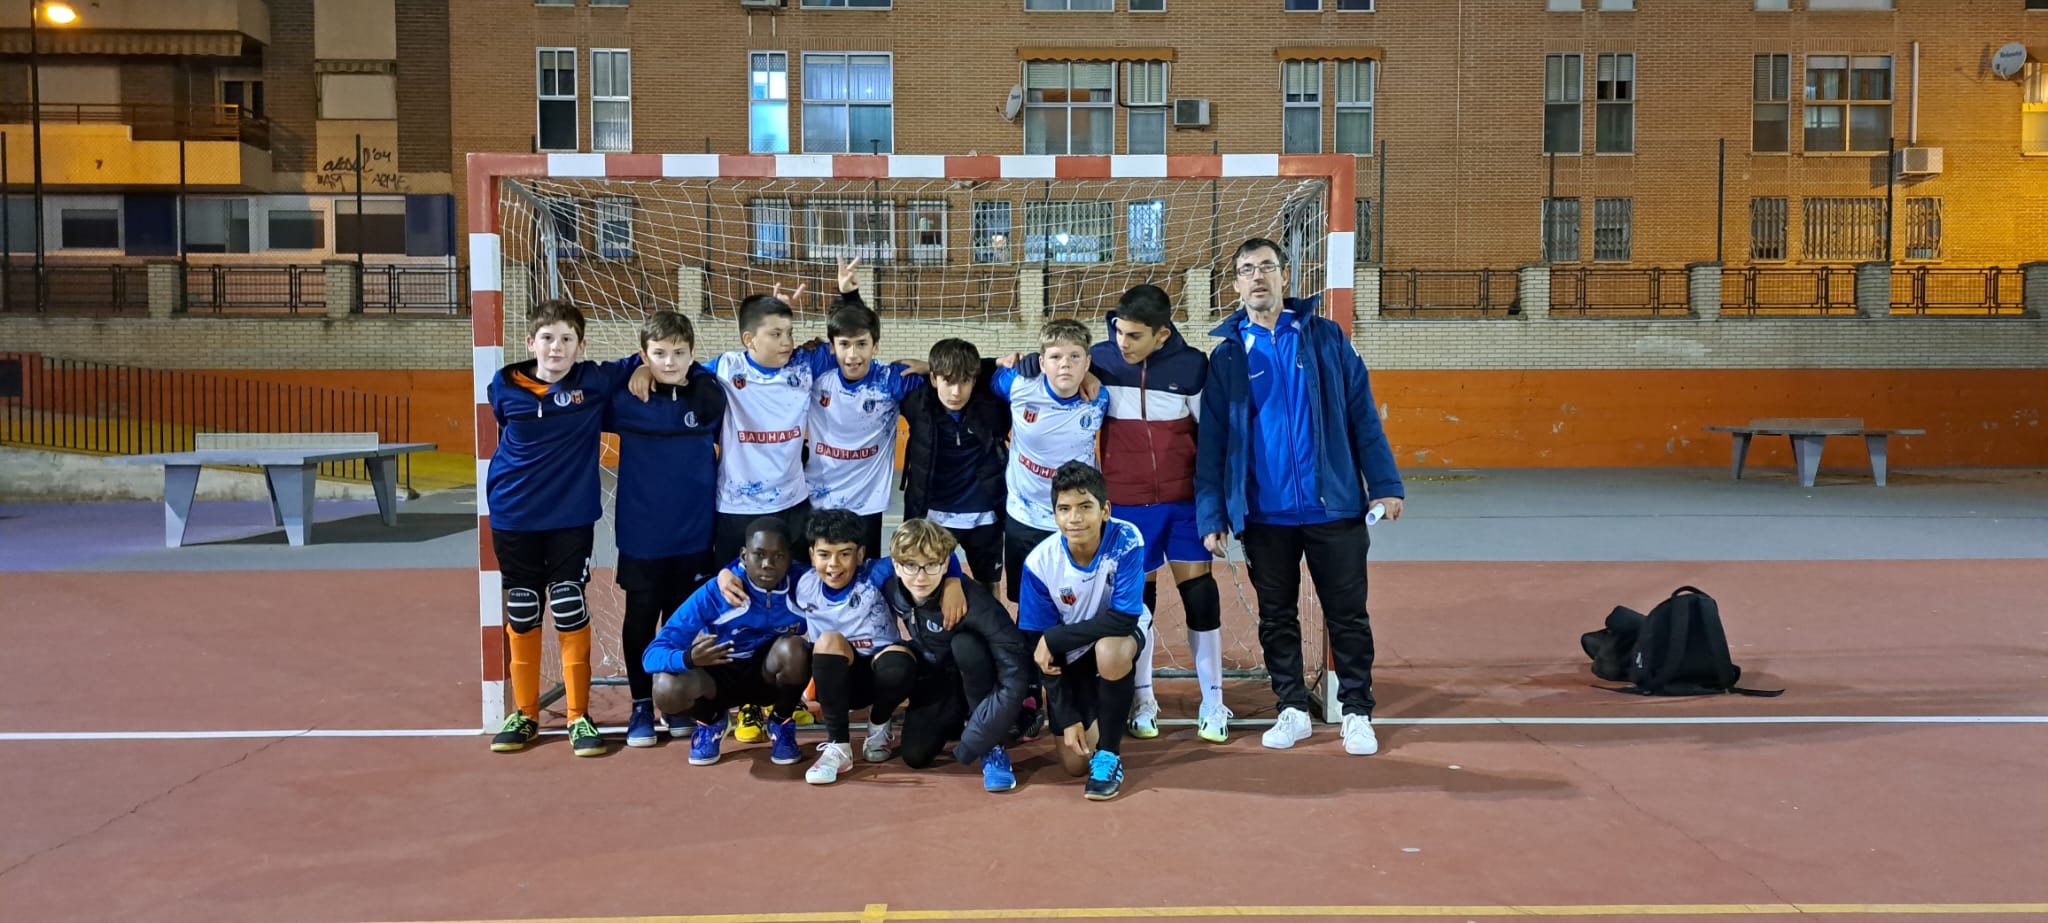 Pirineos Sagrado Corazón 2-3 InterSala 10 Zaragoza (Infantil Masculino) – Jornada 3